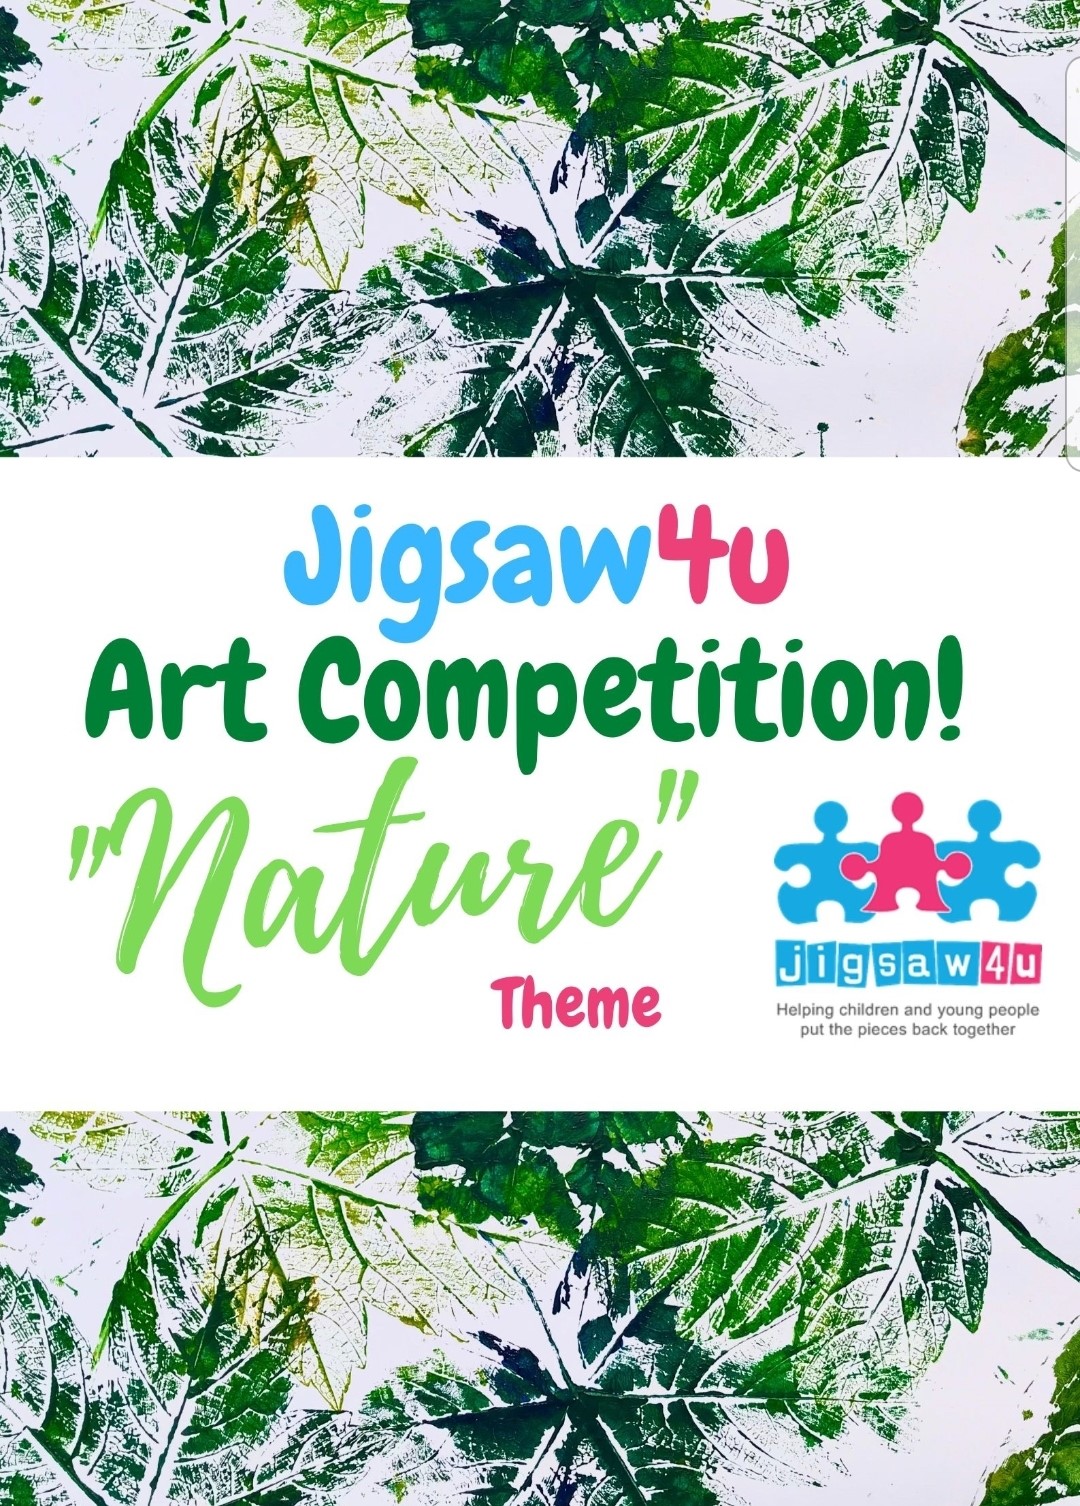 Jigsaw4u’s Online Art Competition